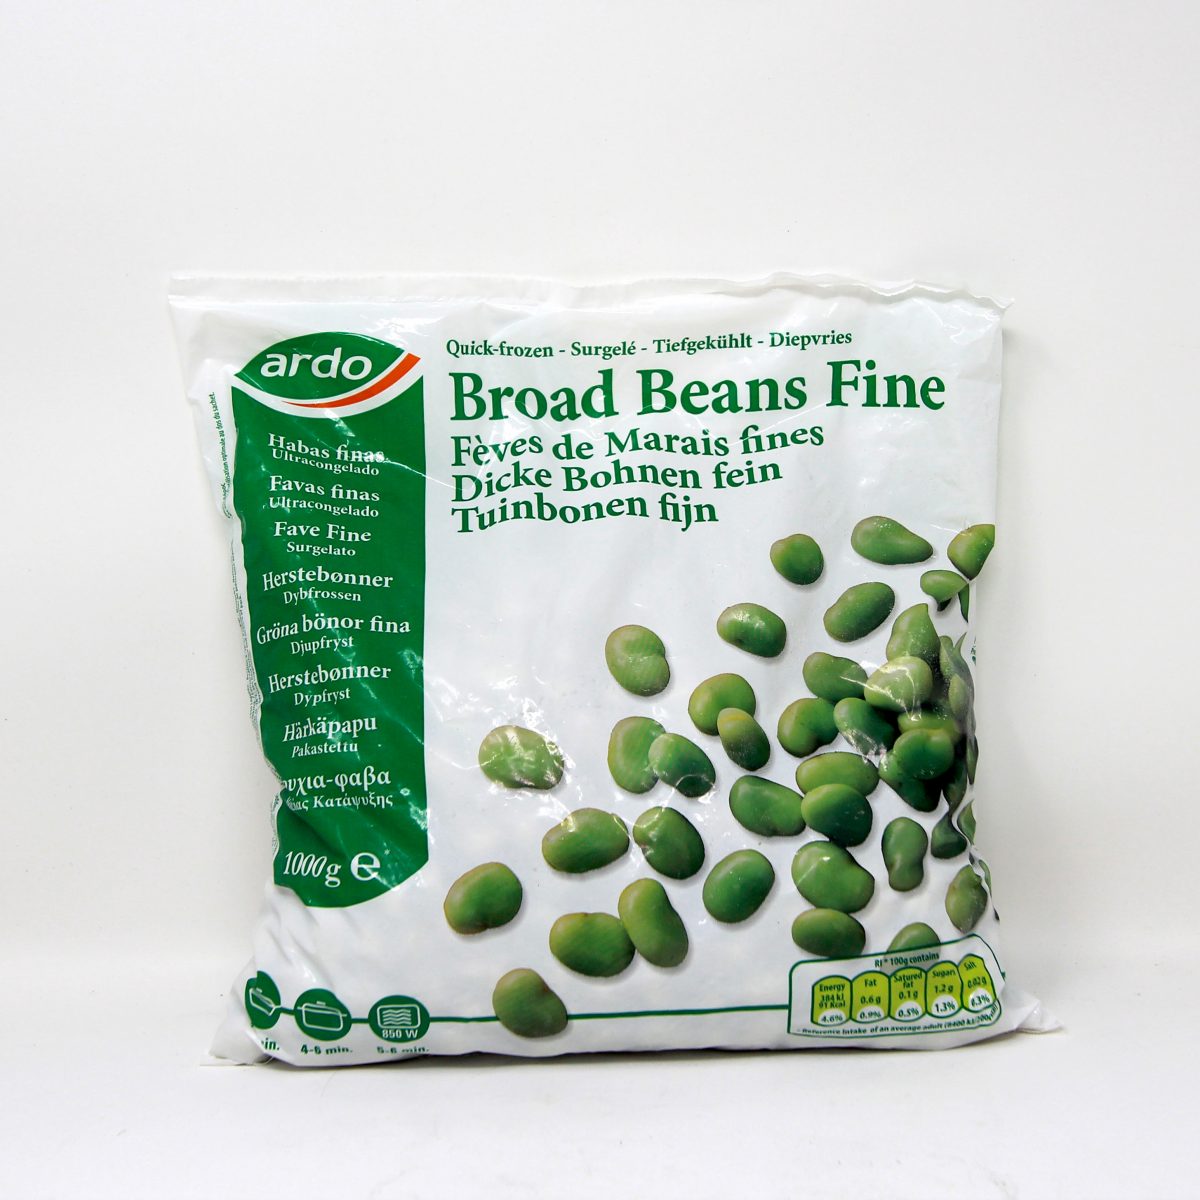 Frozen-Broad-Beans